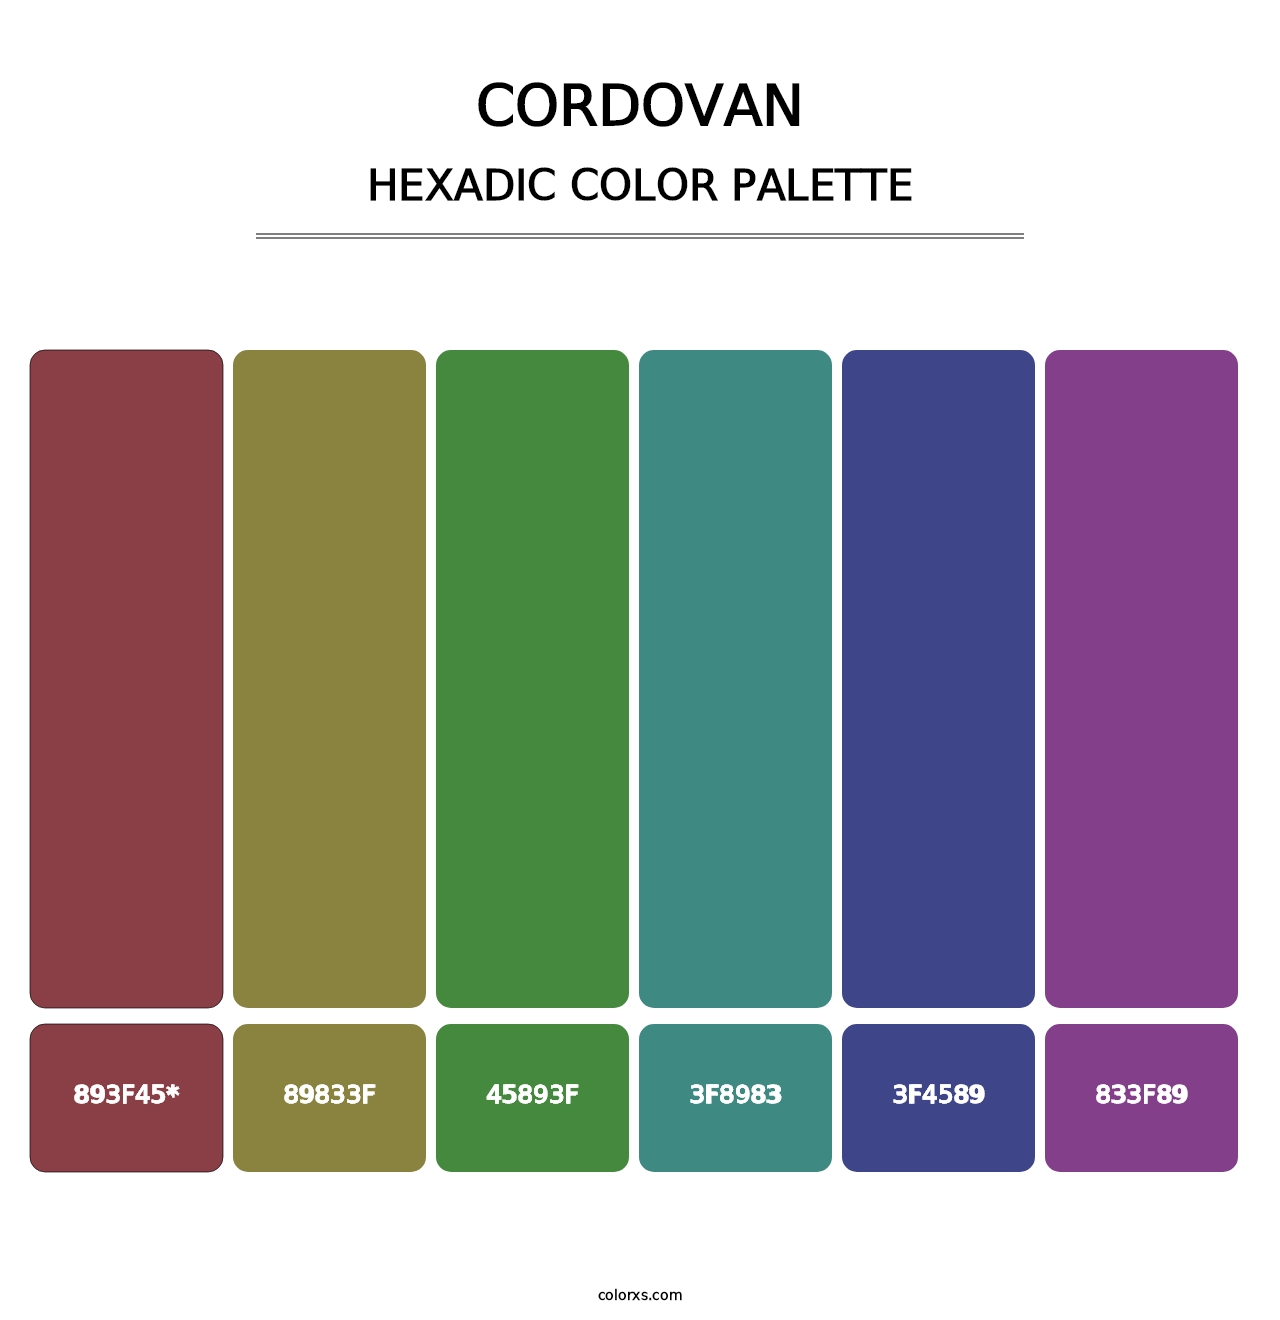 Cordovan - Hexadic Color Palette